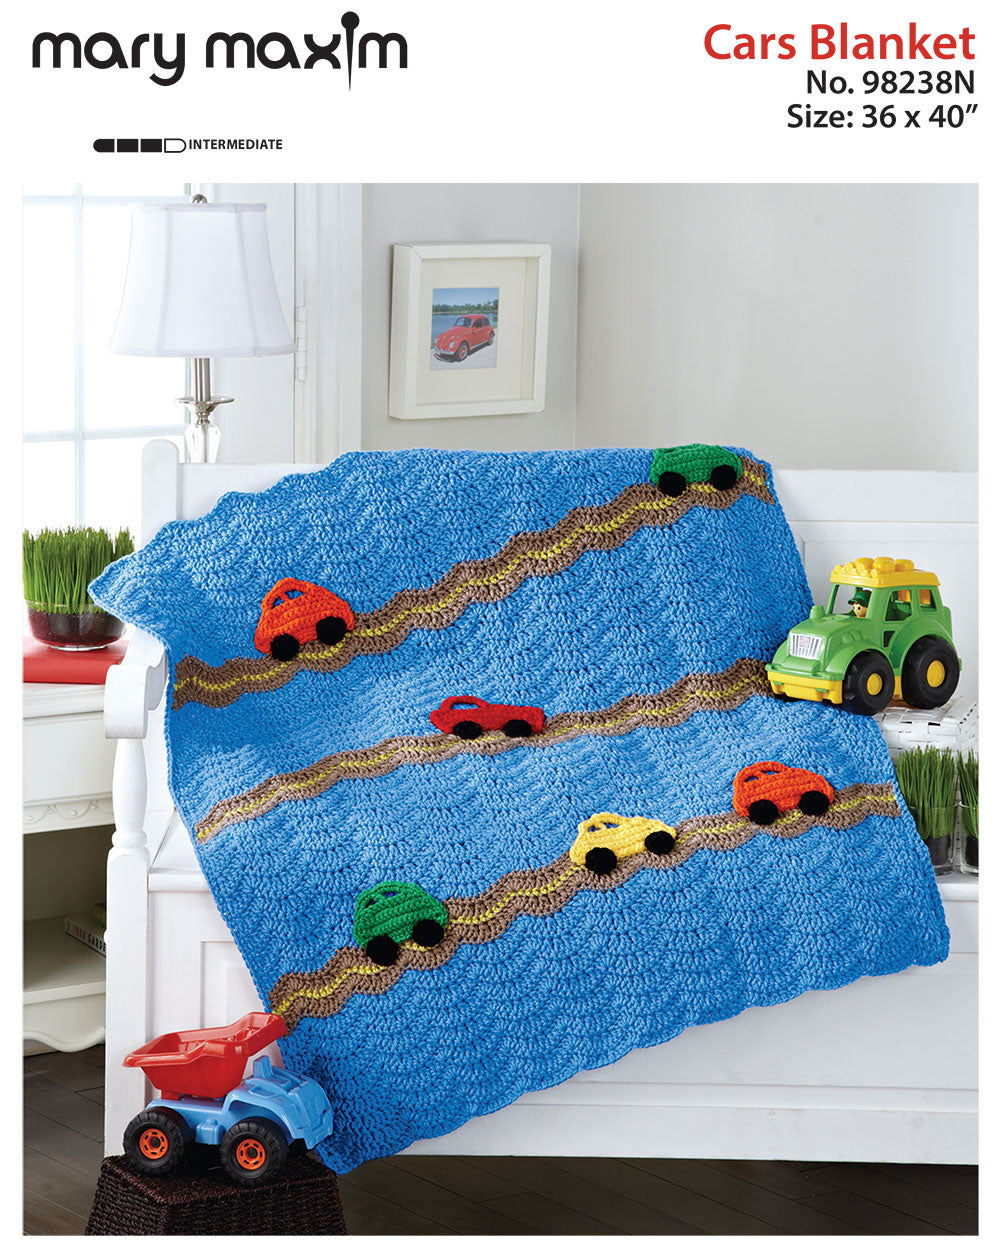 Cars Blanket Pattern